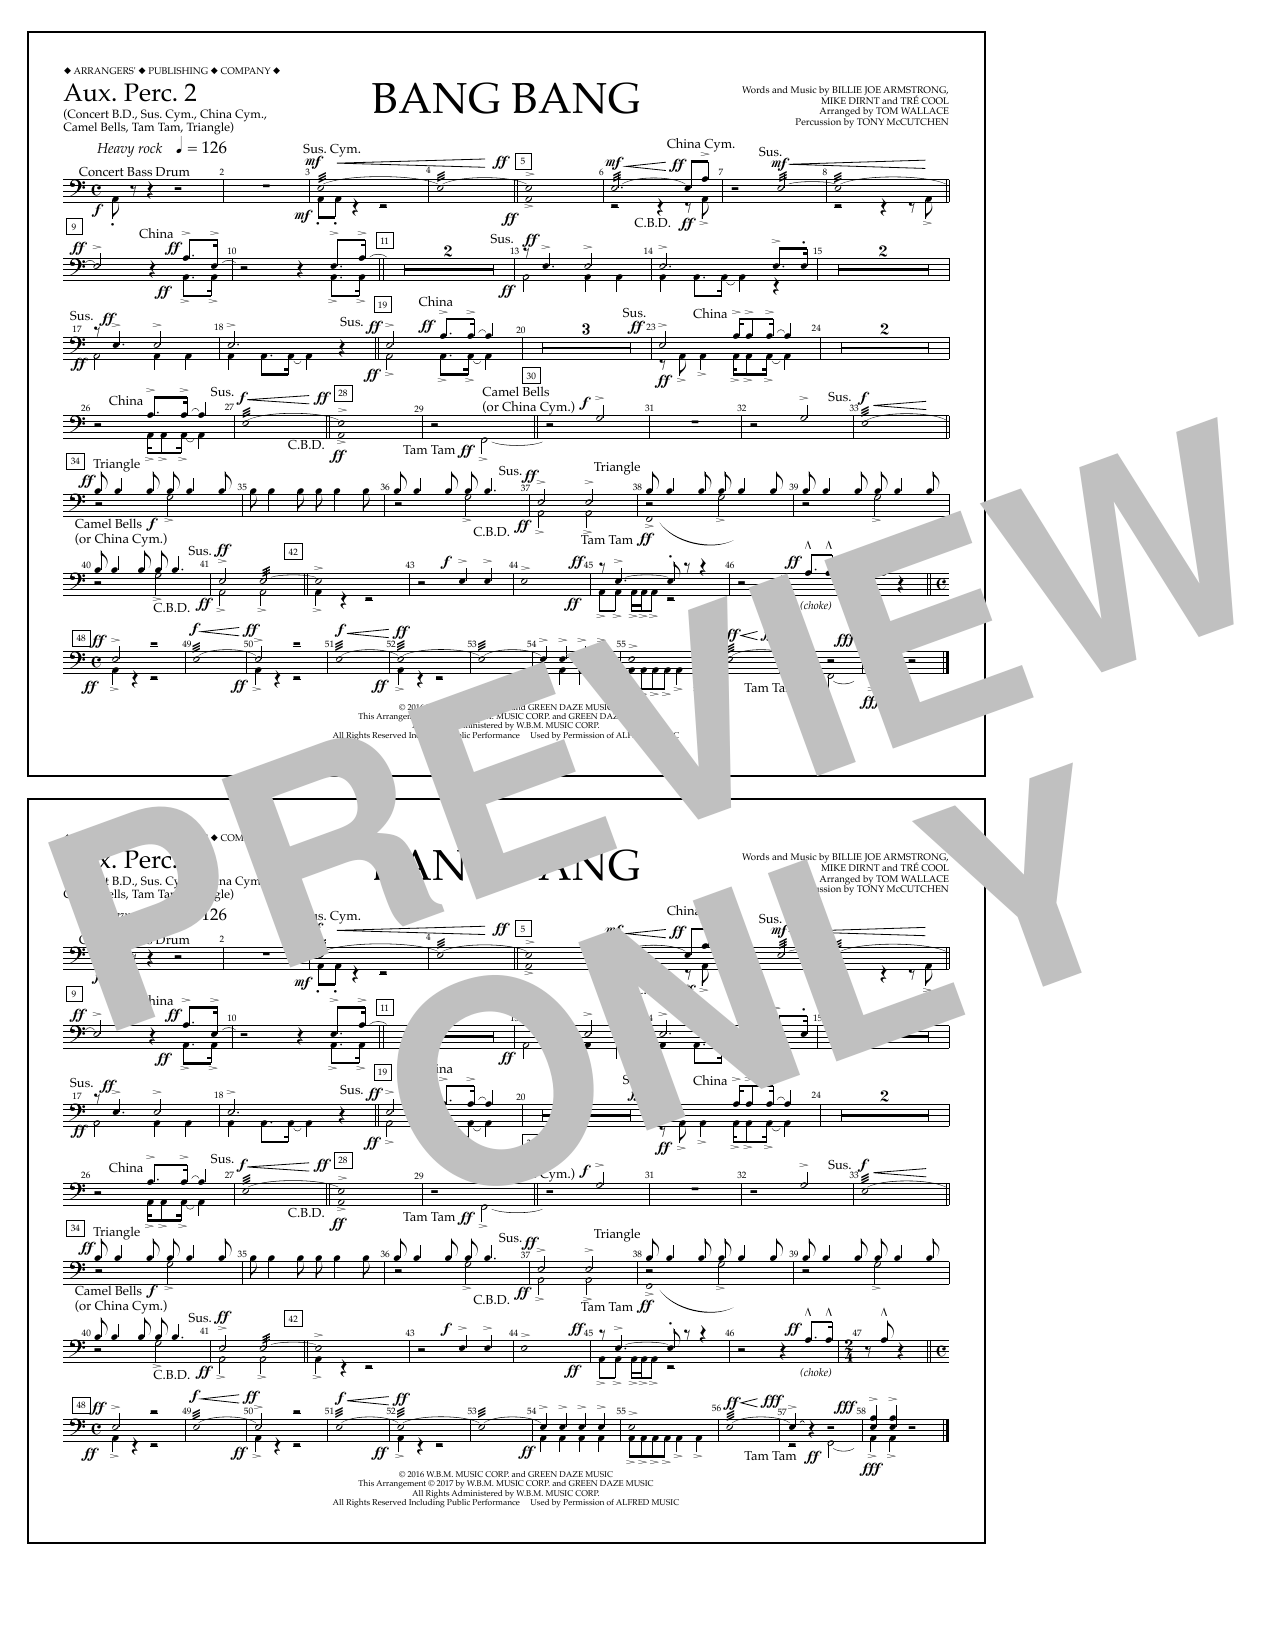 Tom Wallace Bang Bang - Aux. Perc. 2 Sheet Music Notes & Chords for Marching Band - Download or Print PDF